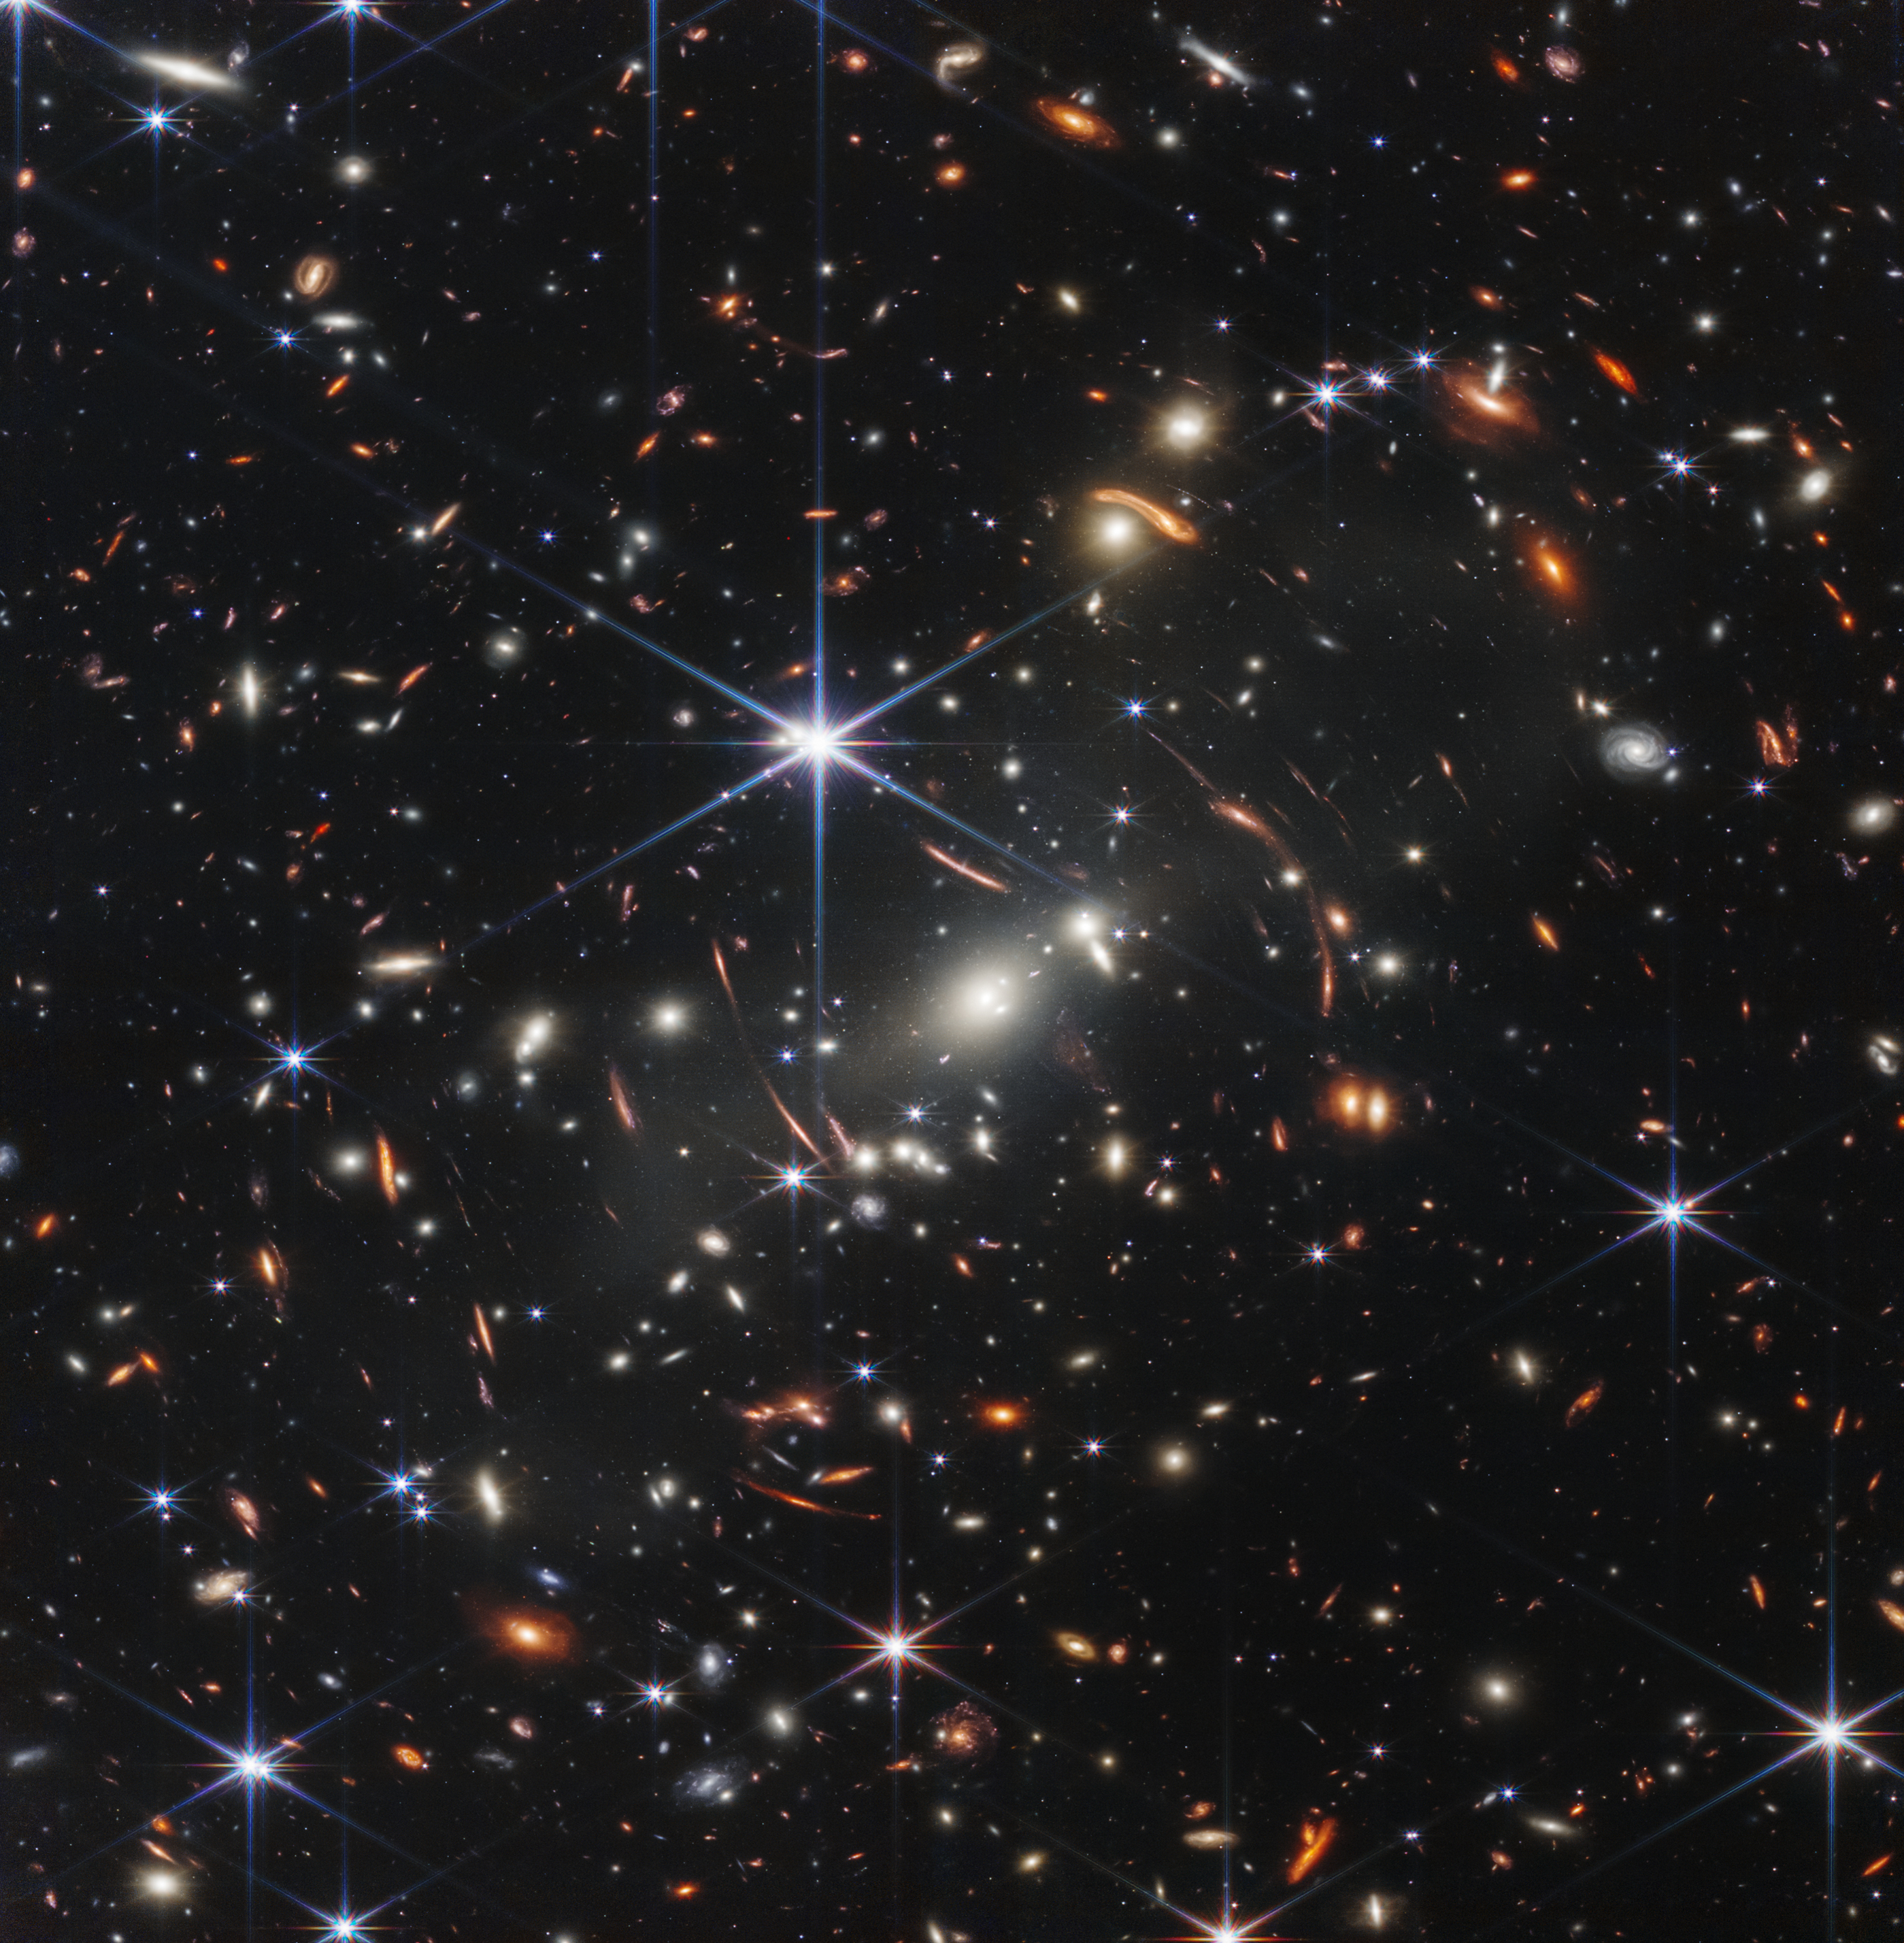 Nasaの新宇宙望遠鏡 史上最遠 最精細な宇宙の赤外線画像を撮影 Pc Watch